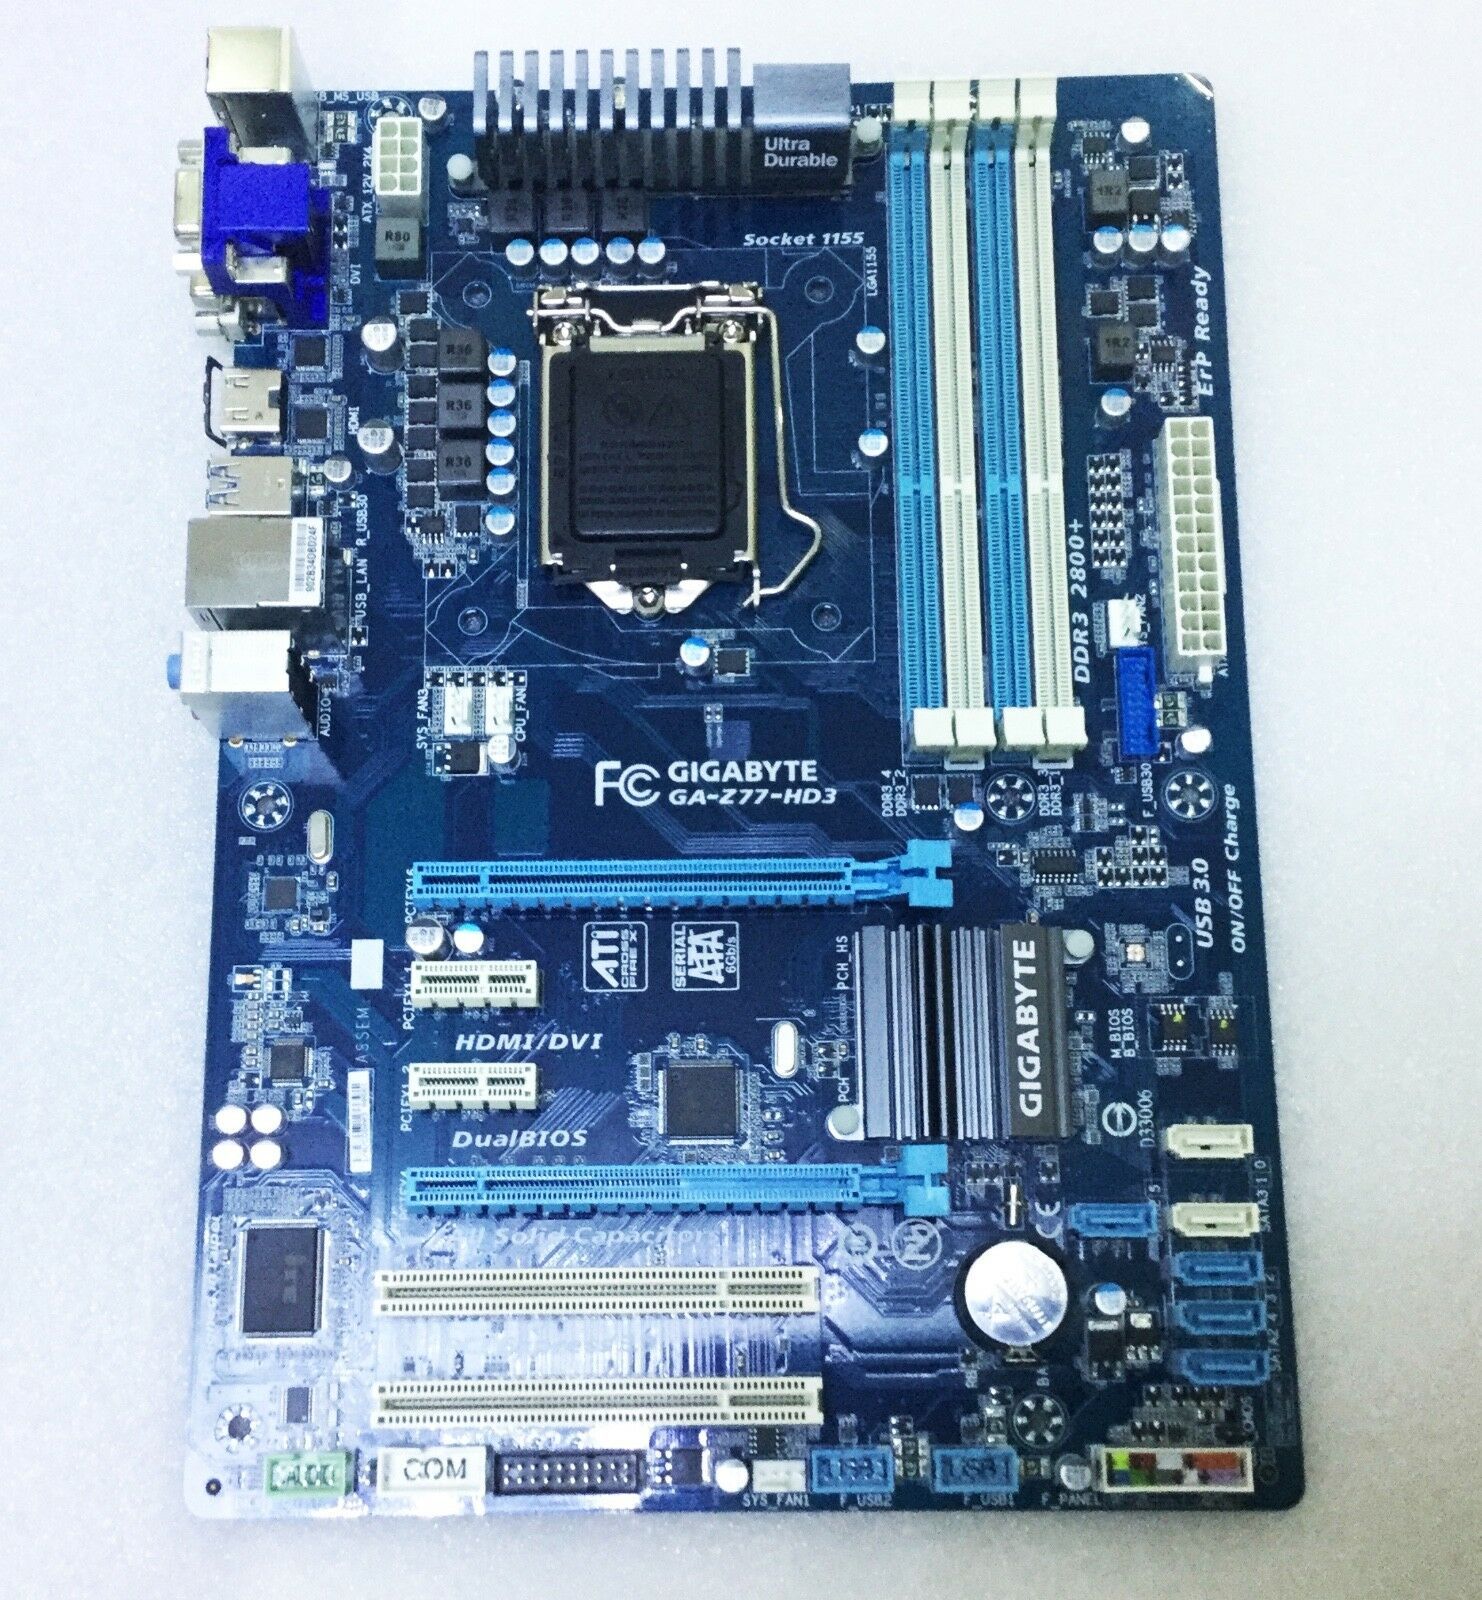 Primary image for GIGABYTE GA-Z77-HD3 Intel Z77 Express LGA 1155 Motherboard DDR3